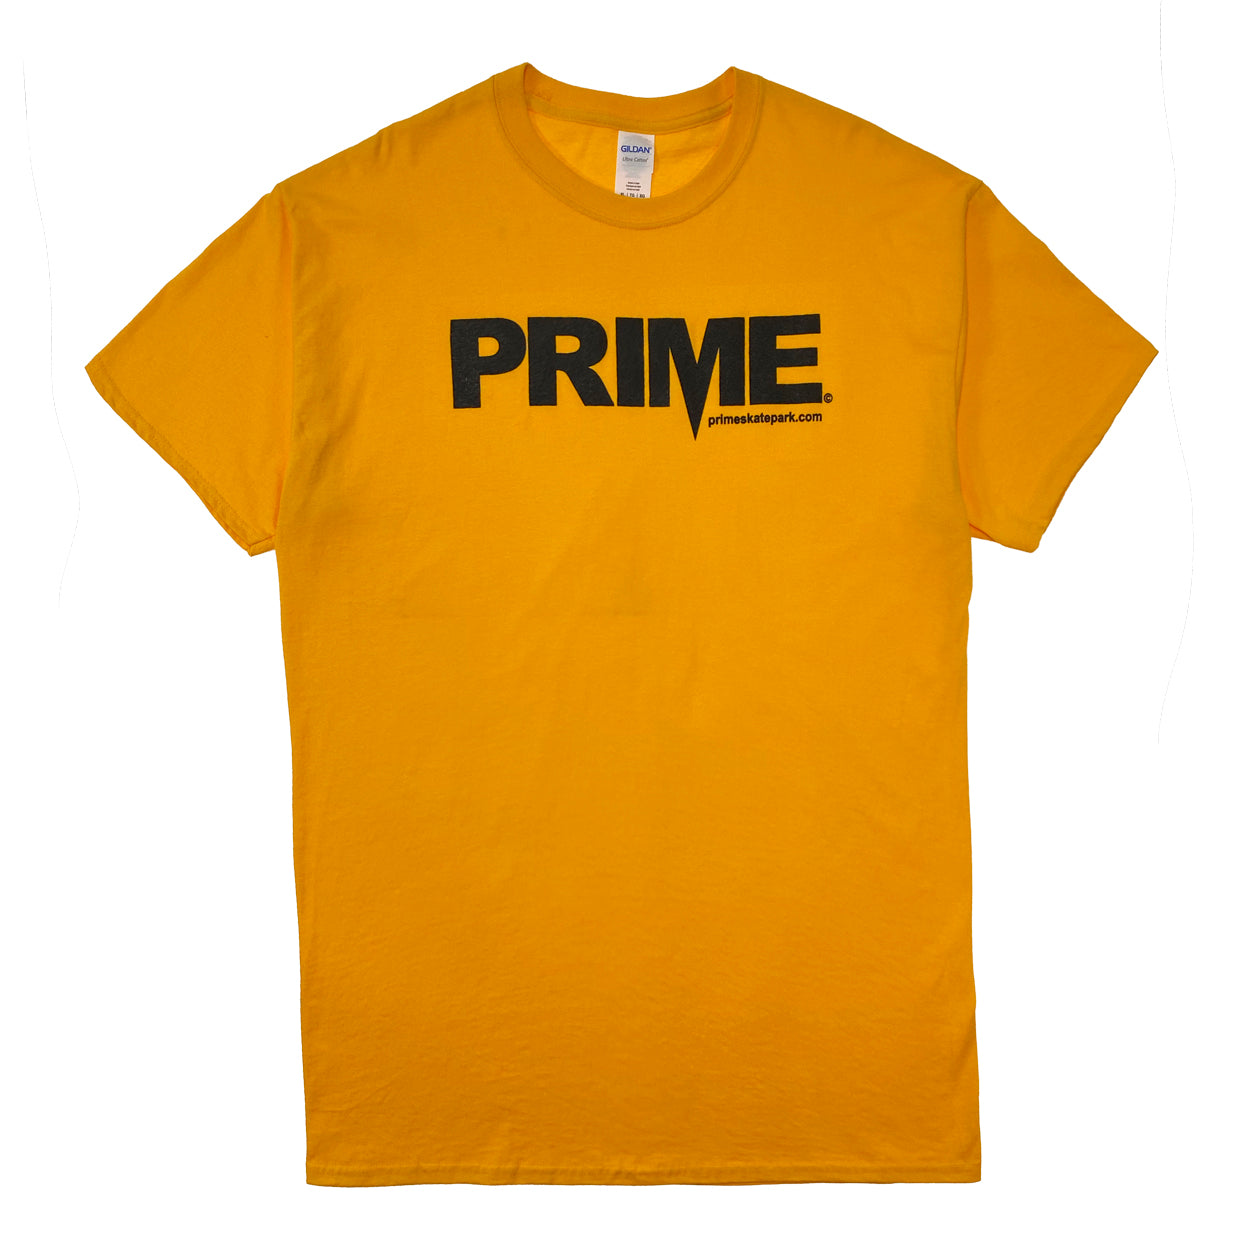 Prime Delux OG Logo T Shirt - Taxi Yellow / Black - Prime Delux Store